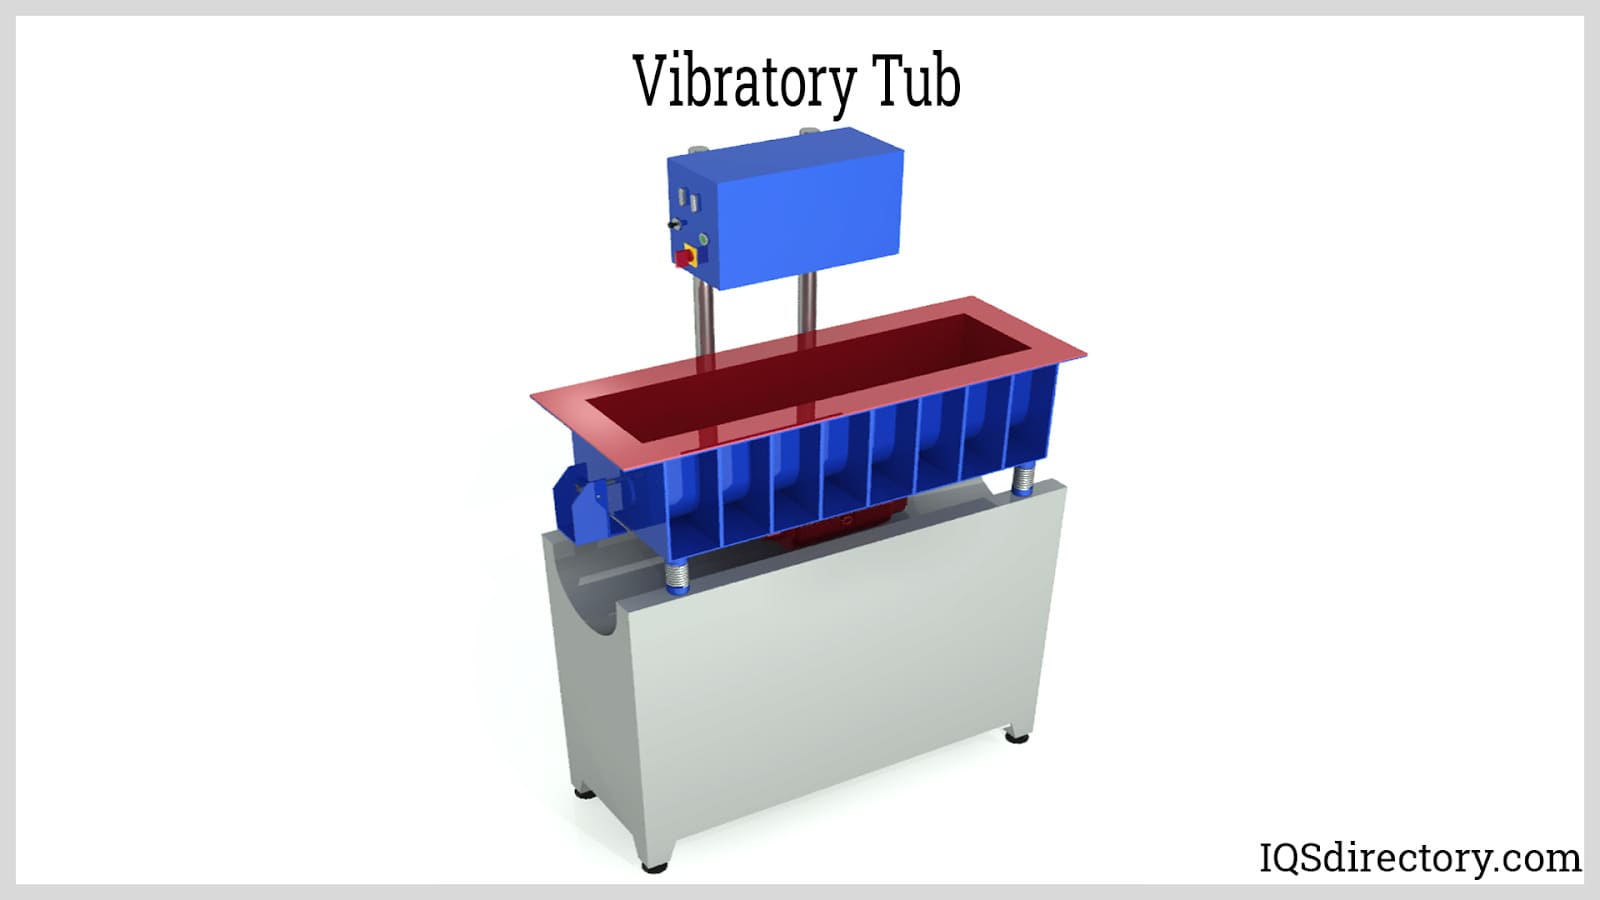 Vibratory Tub